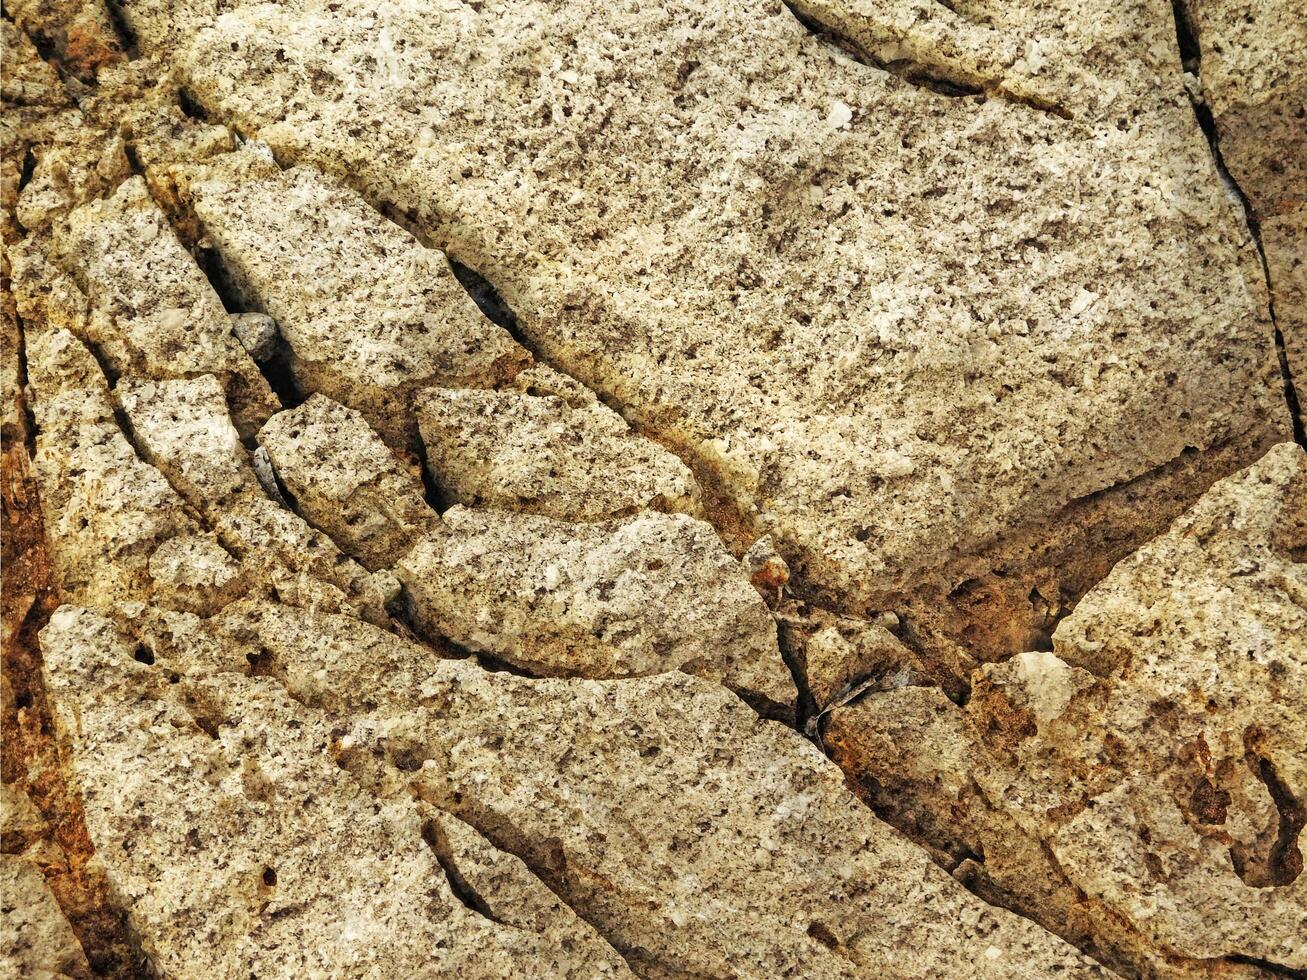 outdoor stone texture photo